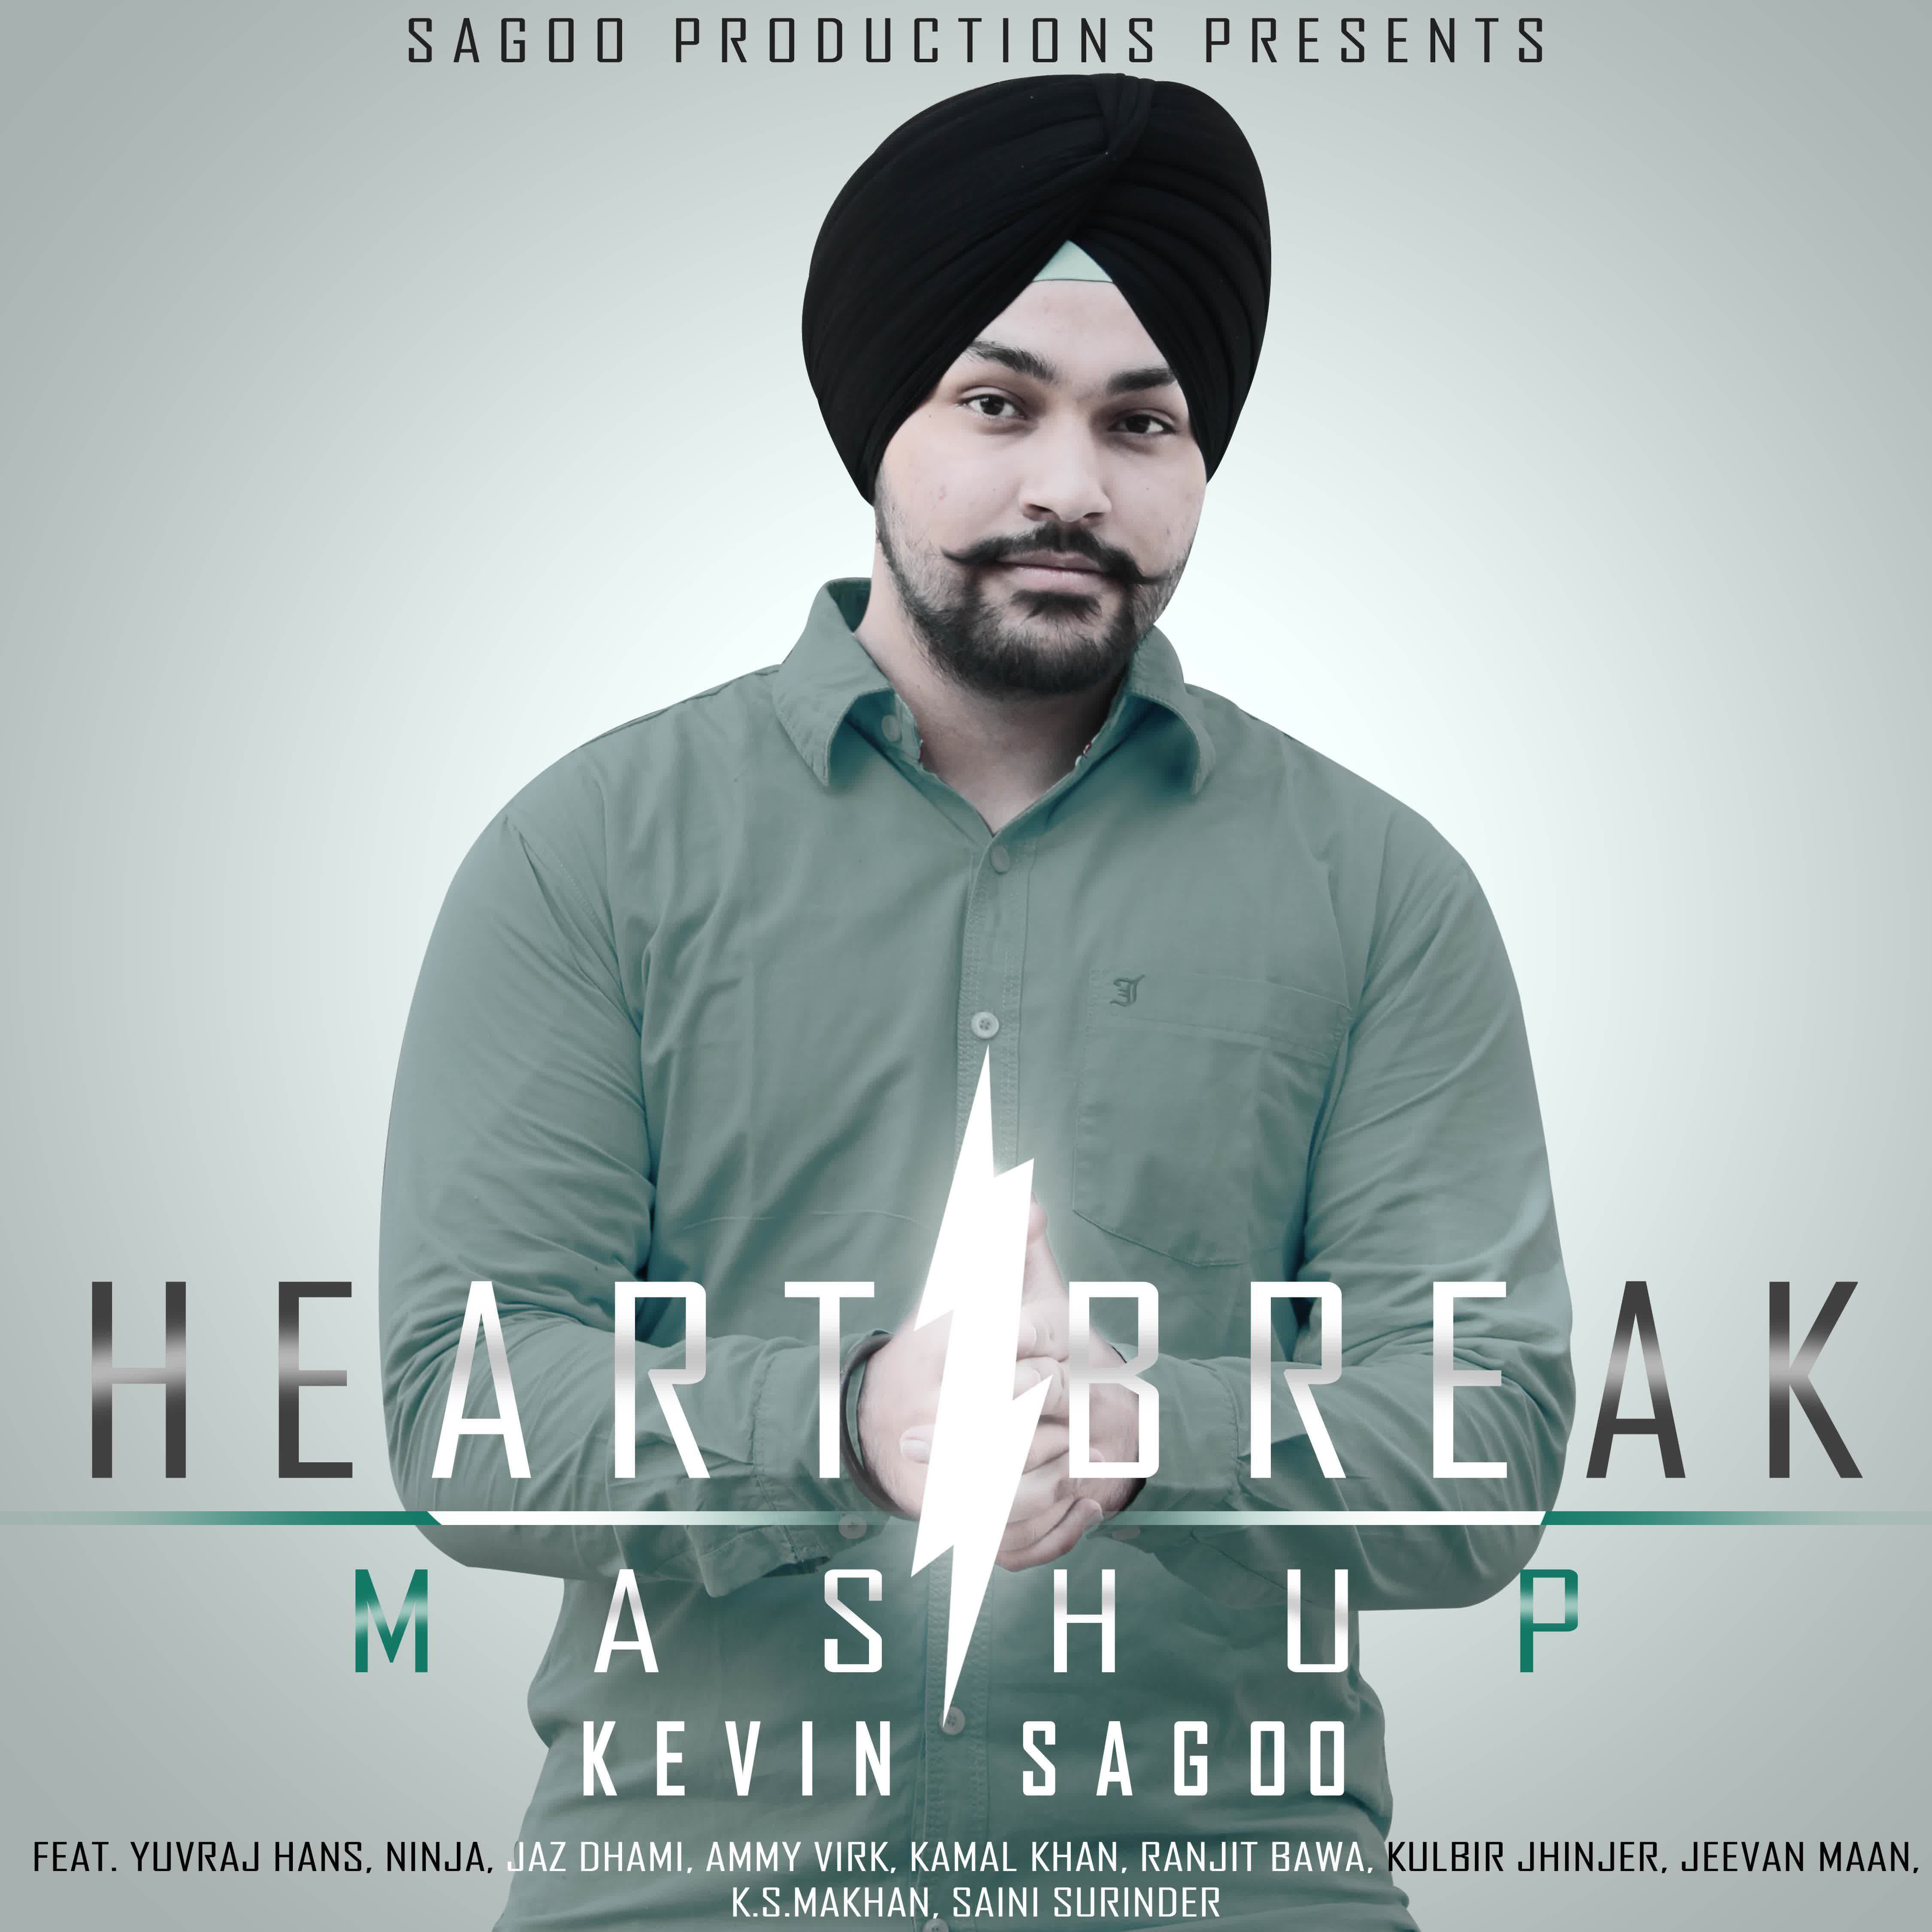 Heartbreak Mashup Kevin Sagoo  Mp3 song download